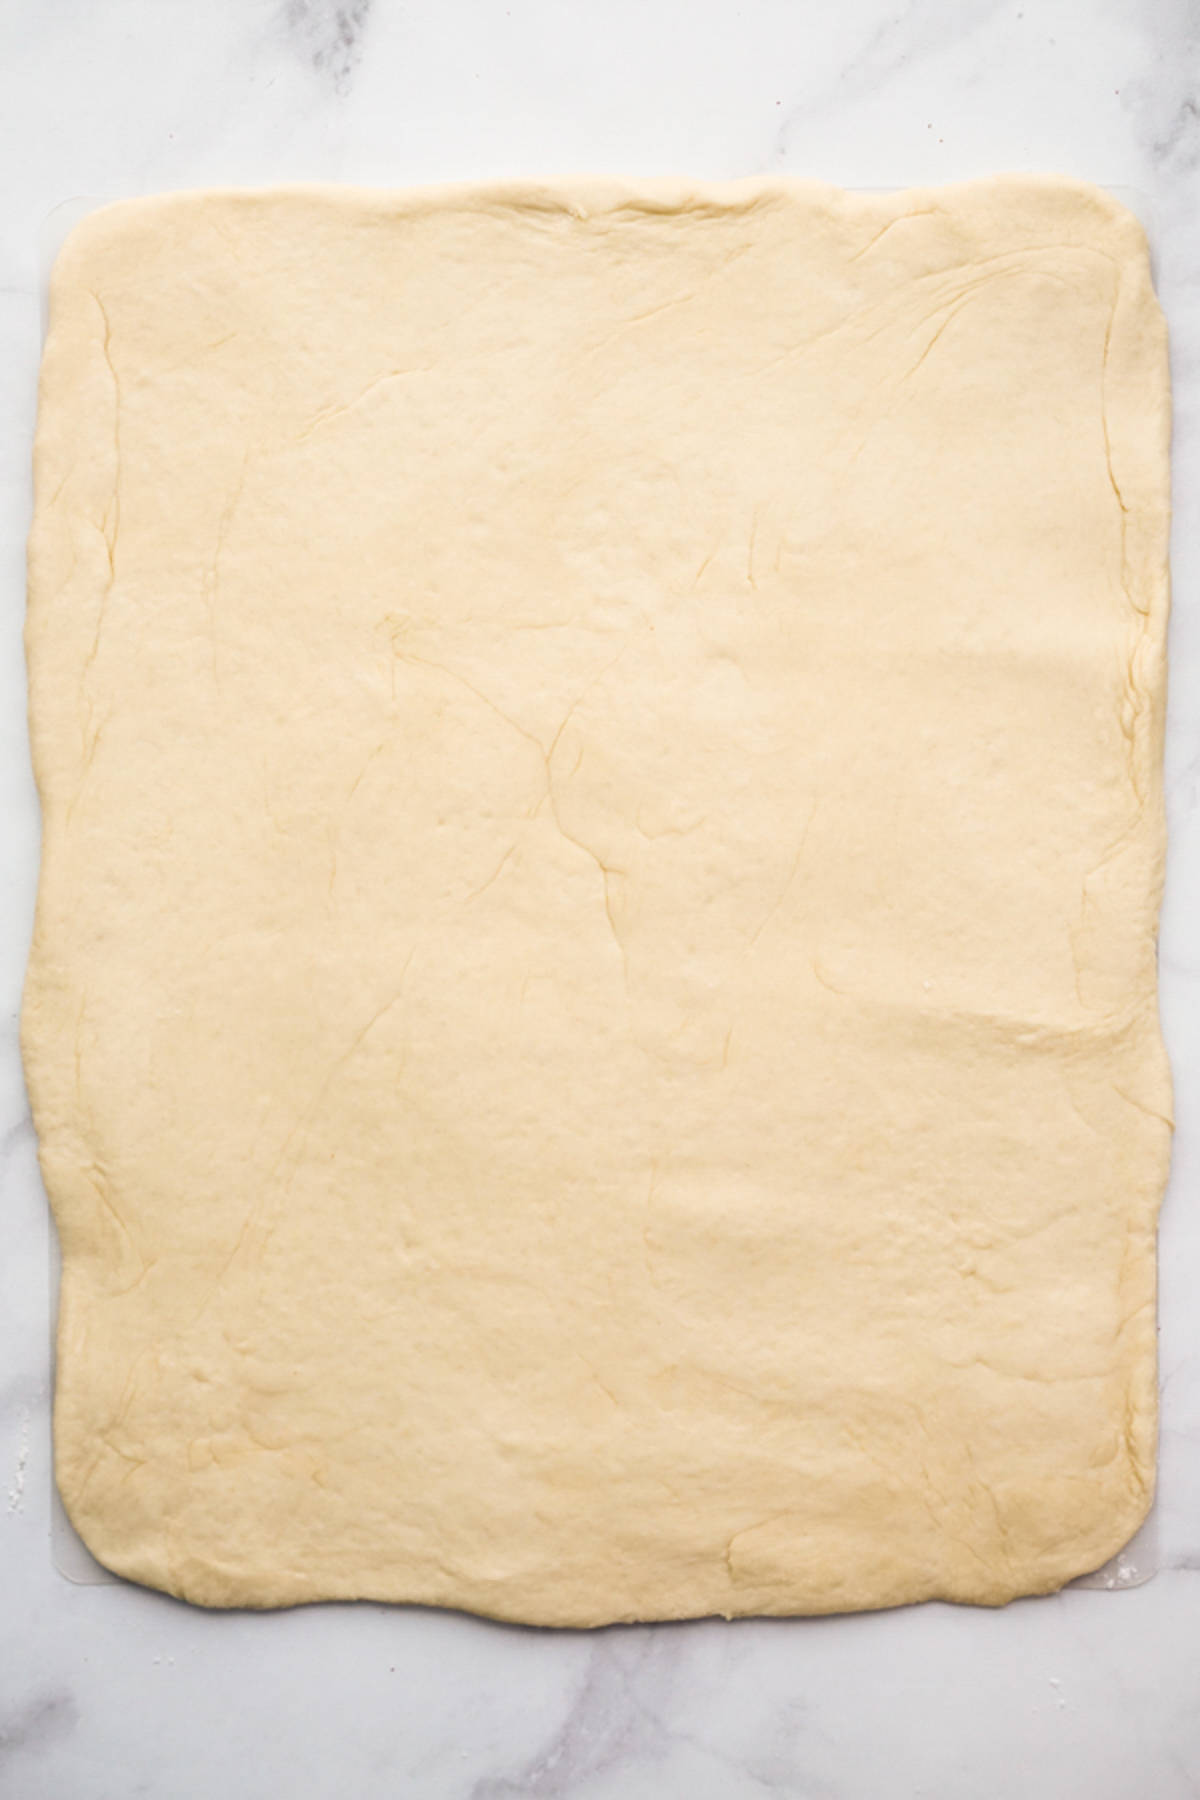 Flattened dough out into a rectangular shape